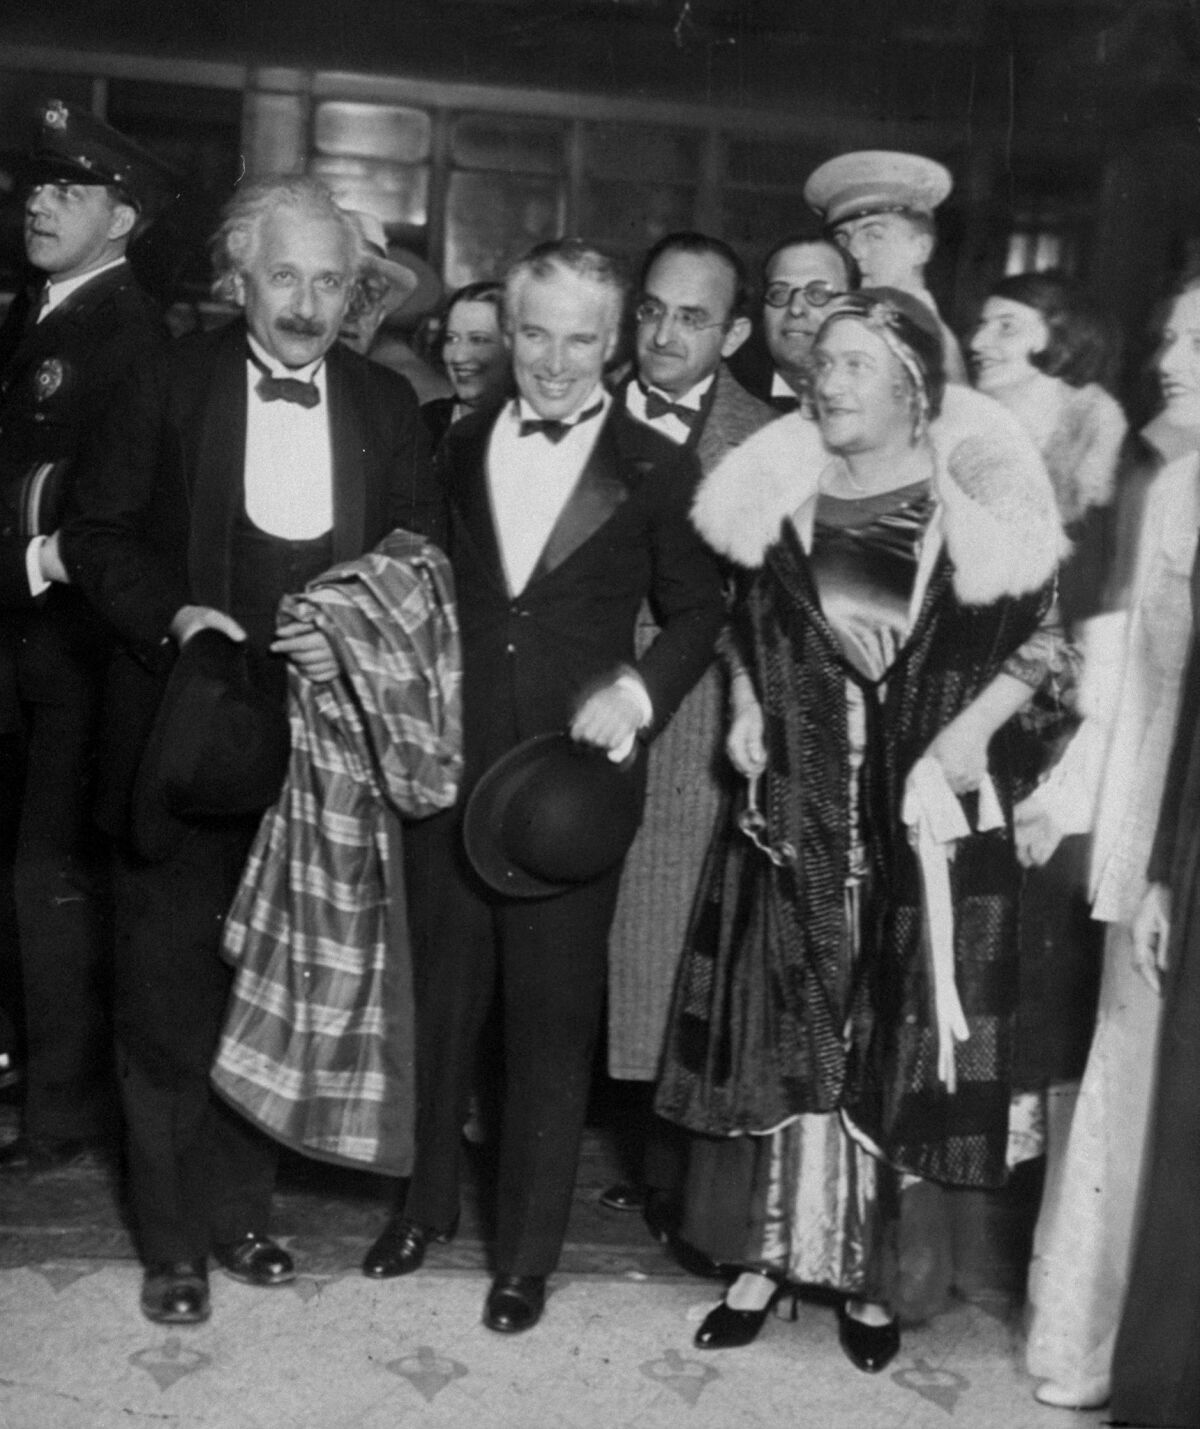 Albert and Elsa Einstein accompany actor-director Charlie Chaplin to a movie premiere in 1931 